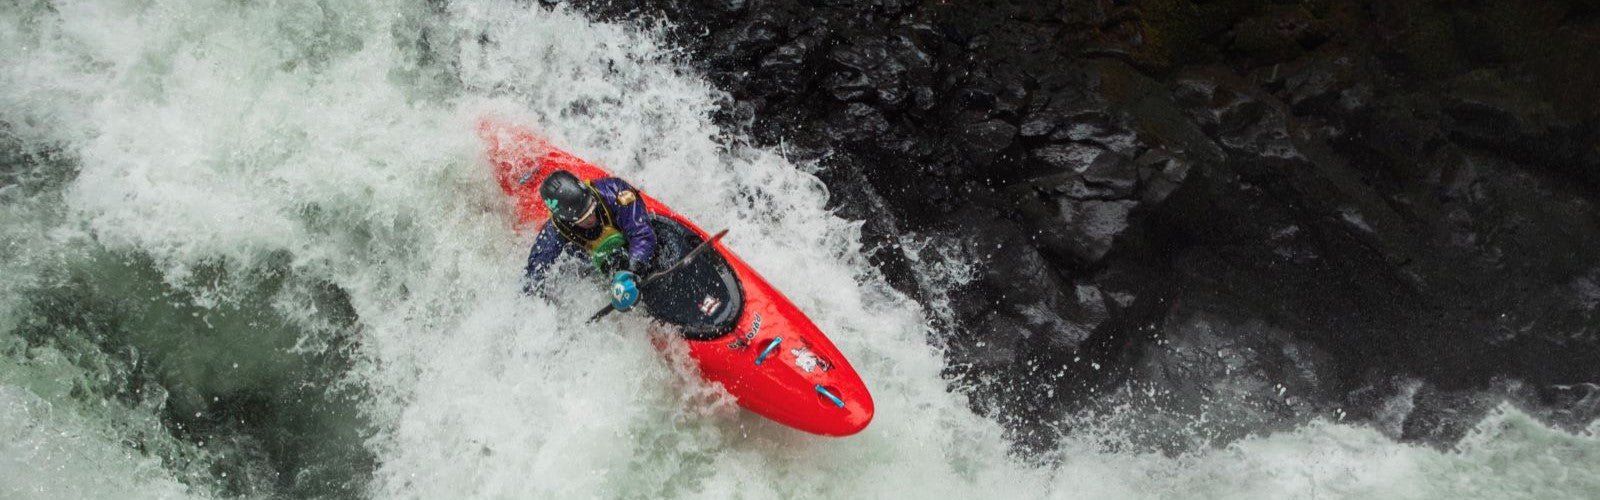 The Four Major Characteristics of Kayak Performance - Next Adventure